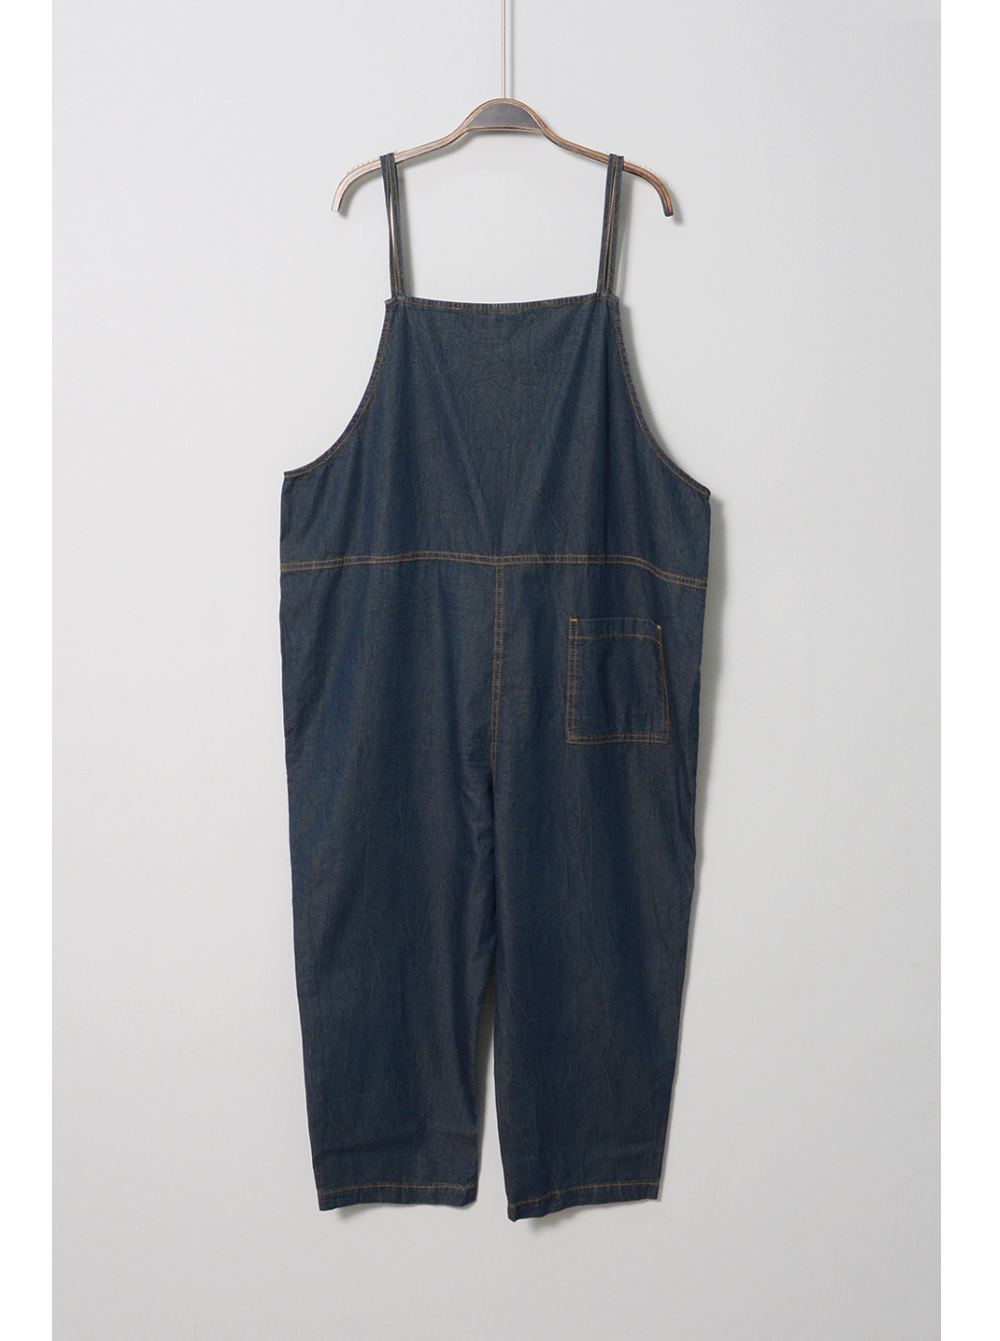 suspenders skirt/pants charcoal color image-S3L6